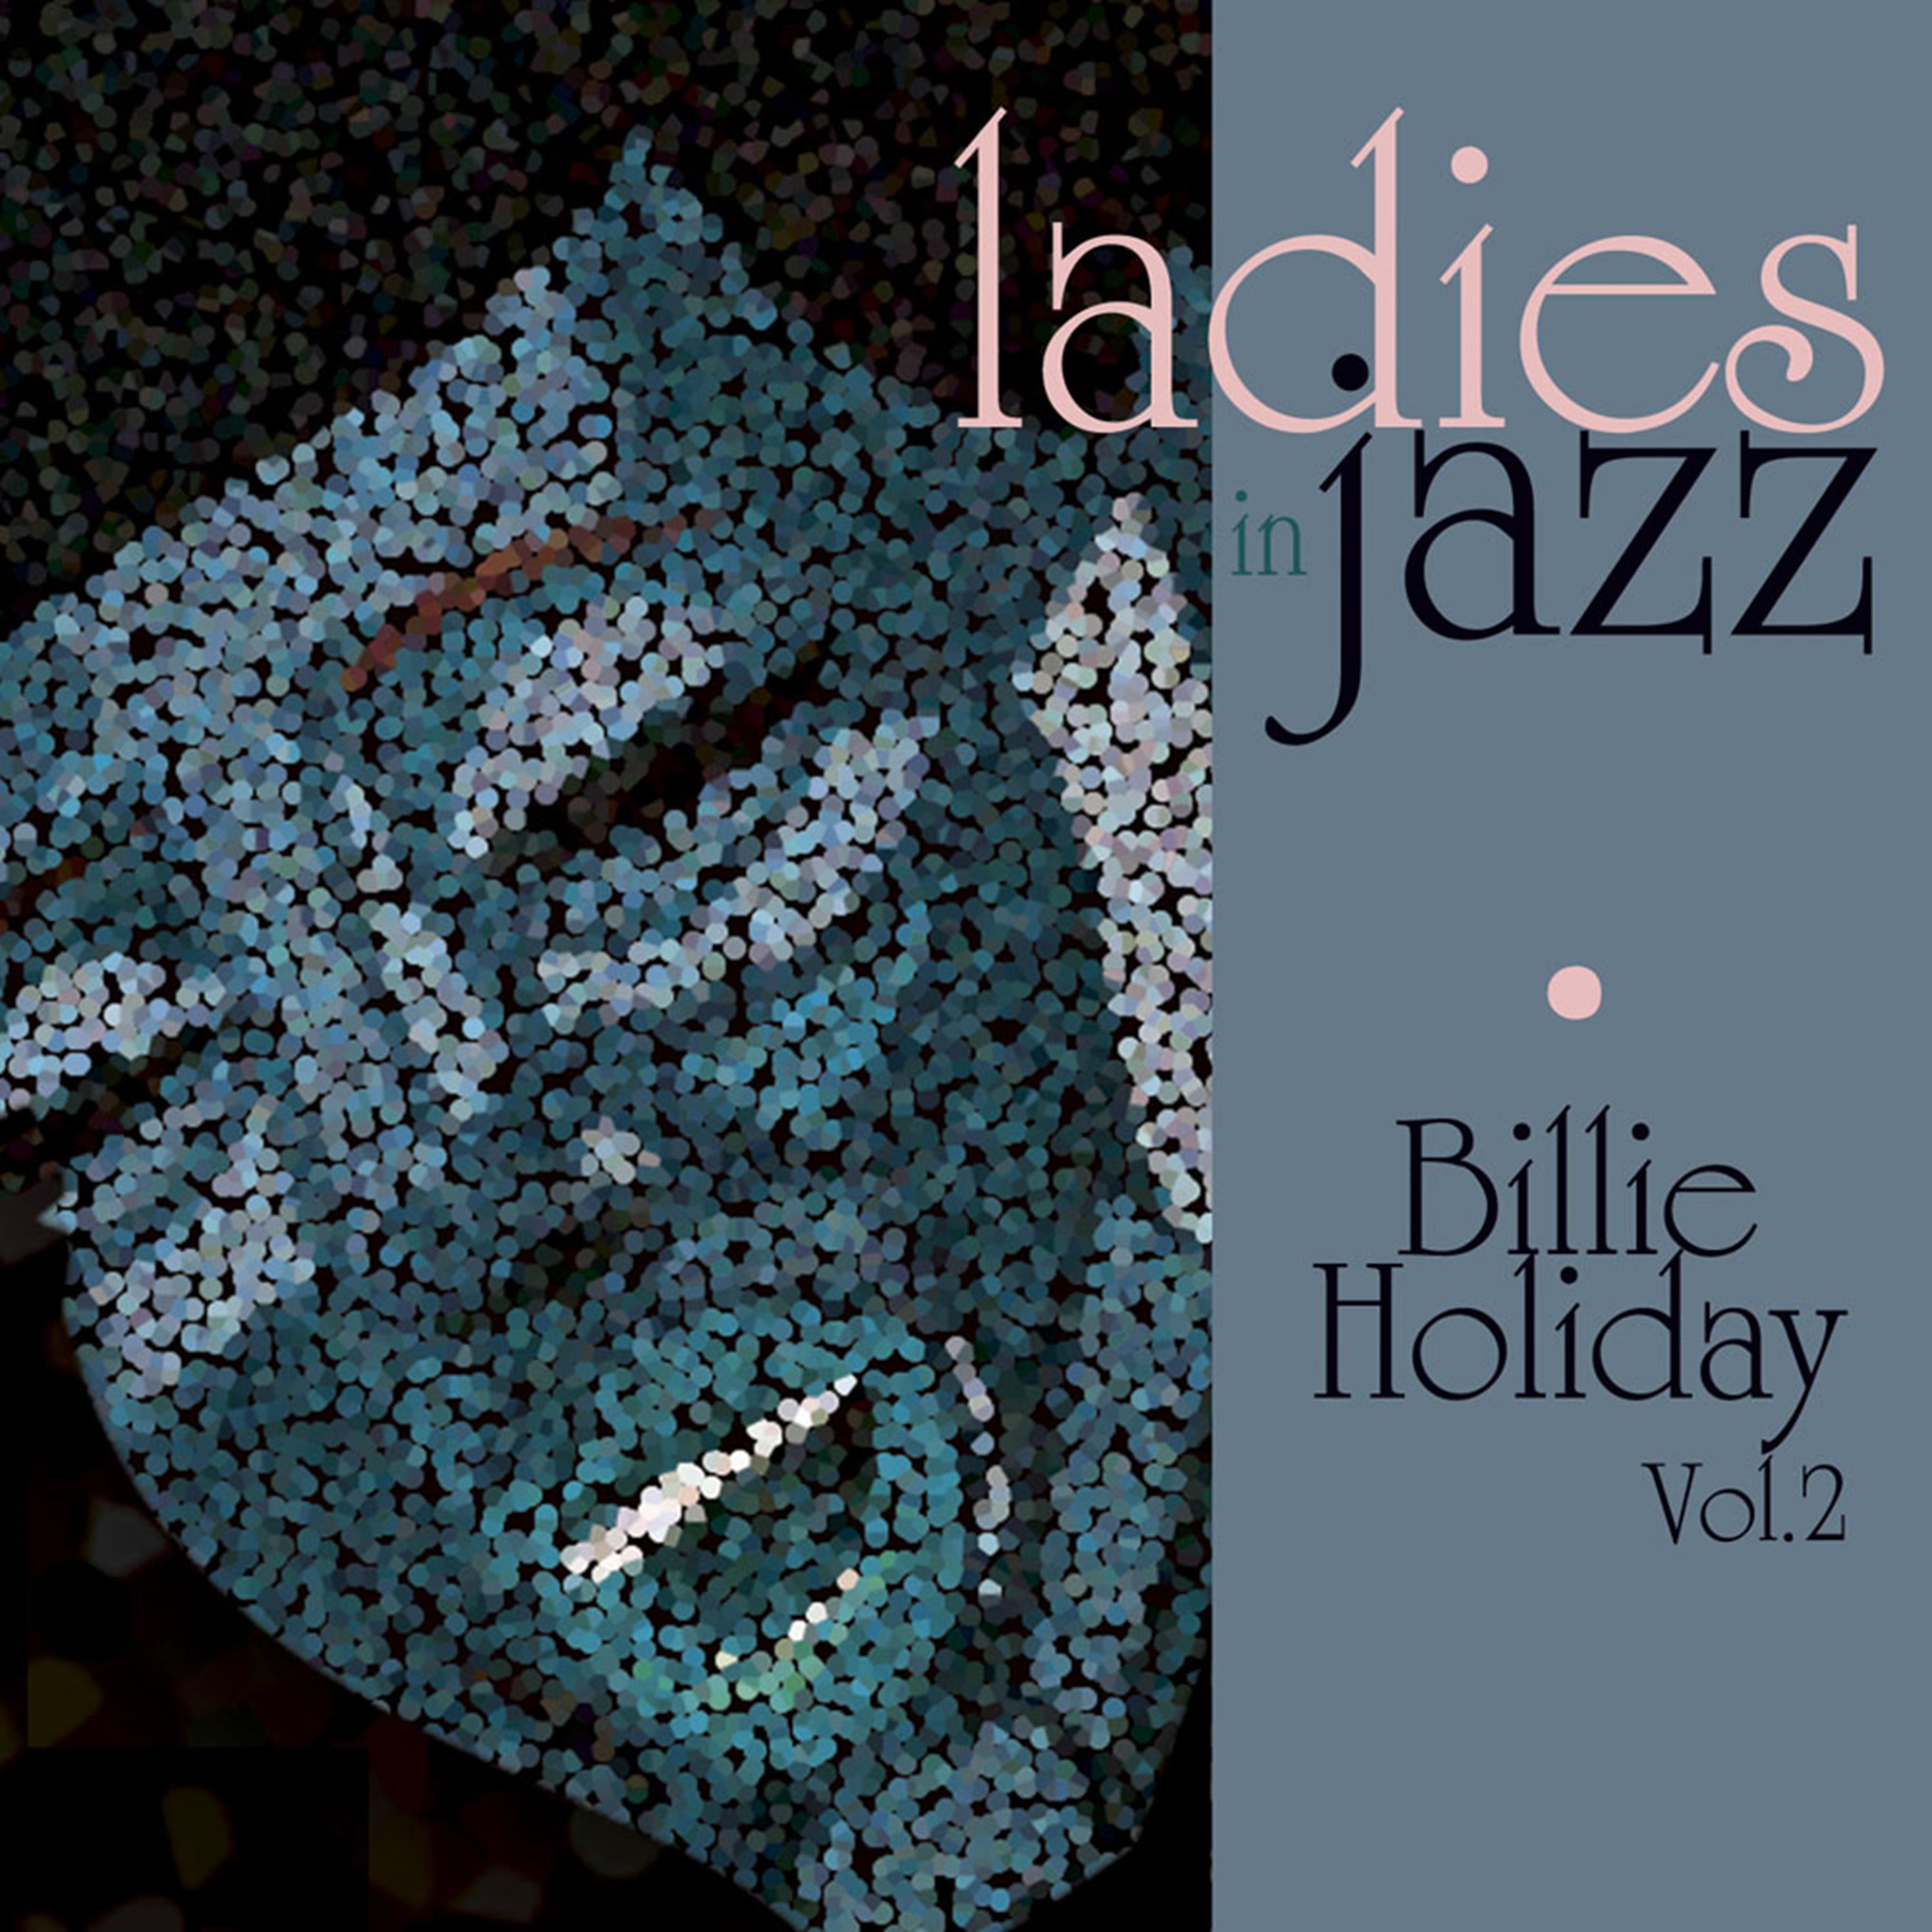 Ladies in Jazz - Billie Holiday, Vol. 2